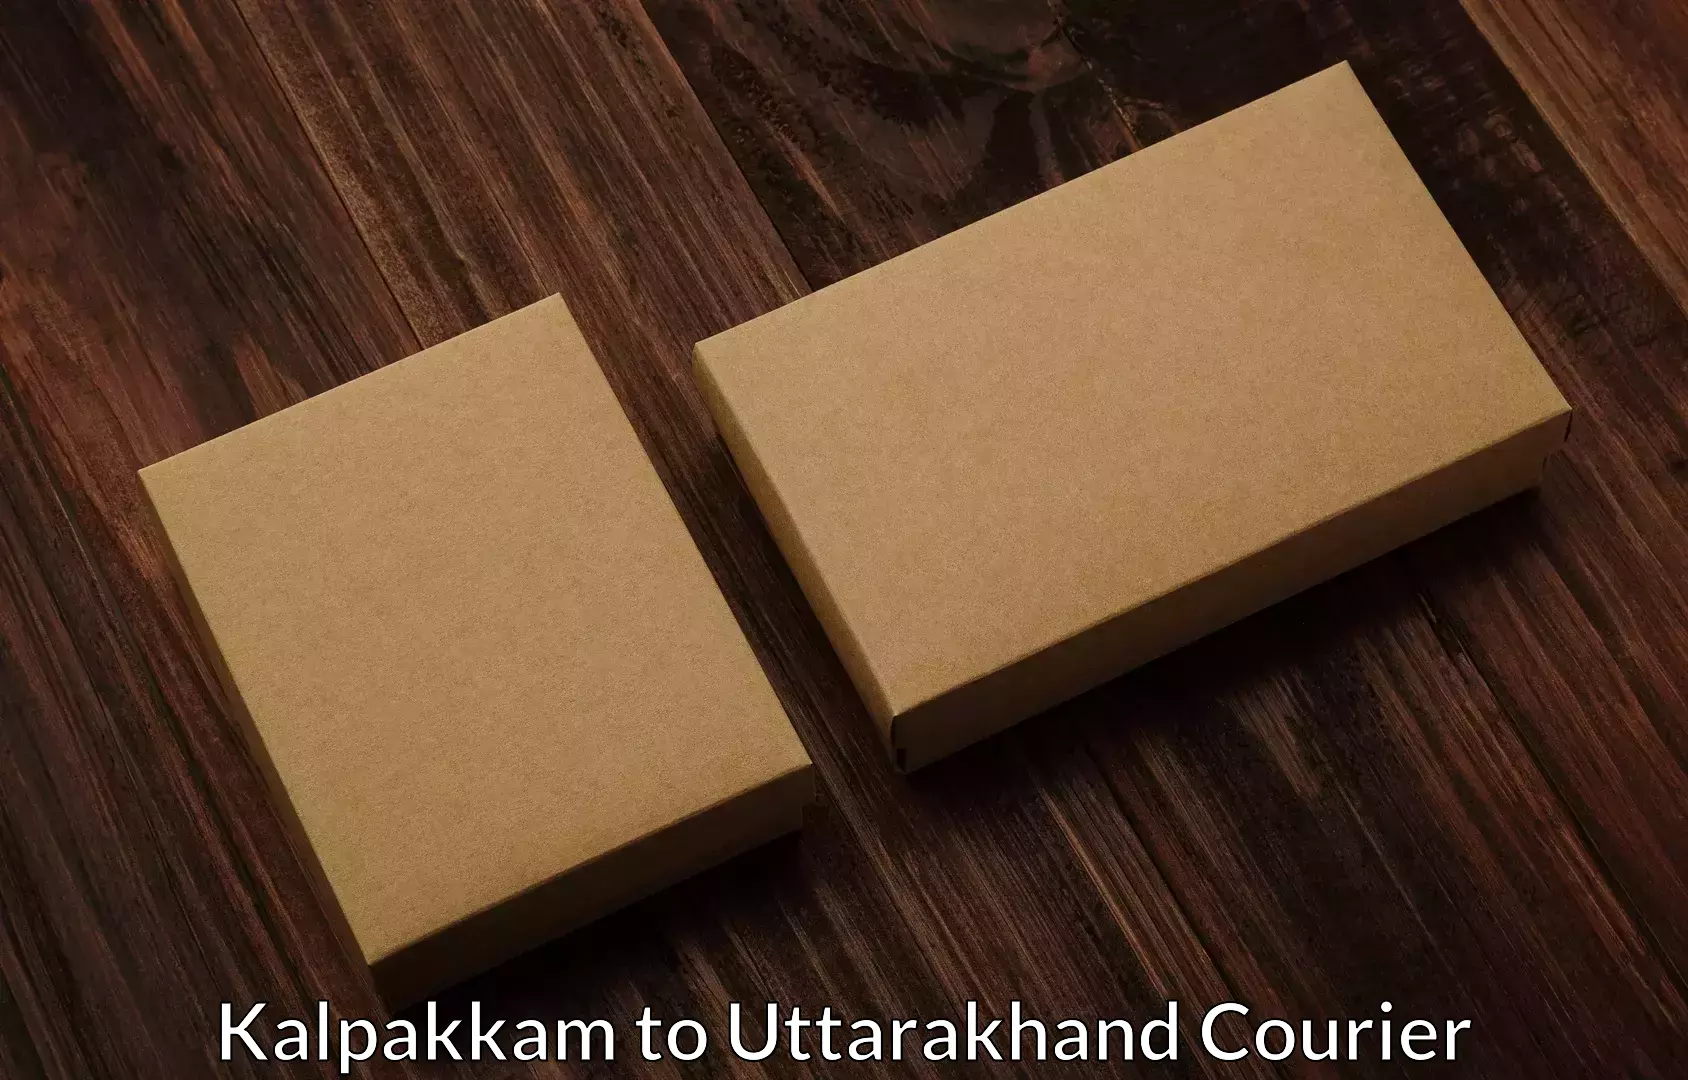 Budget-friendly movers Kalpakkam to Uttarakhand